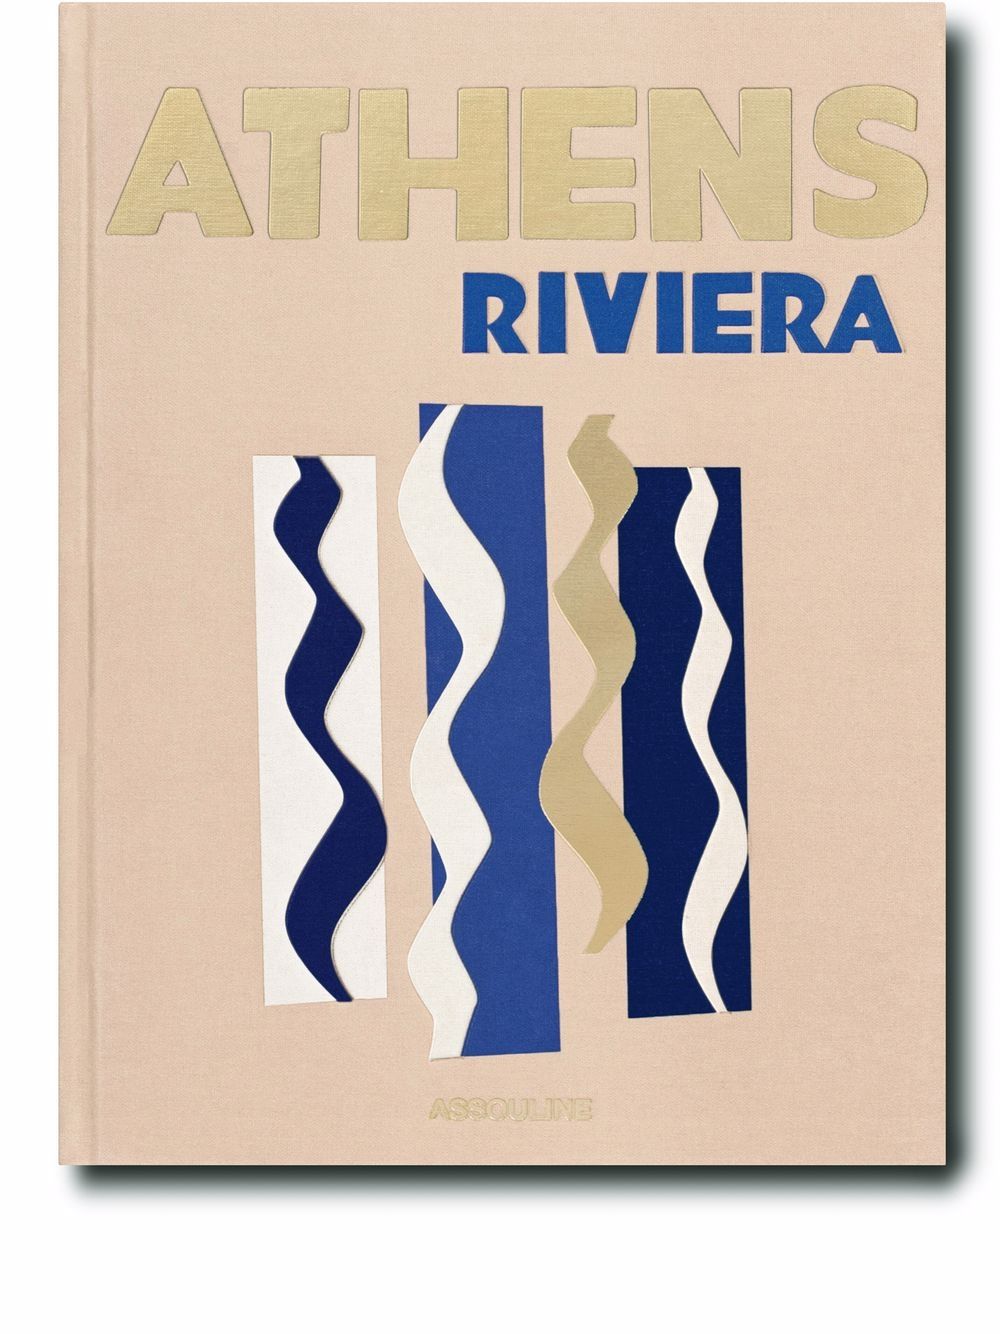 ATHENS RIVIERA BOOK - $105